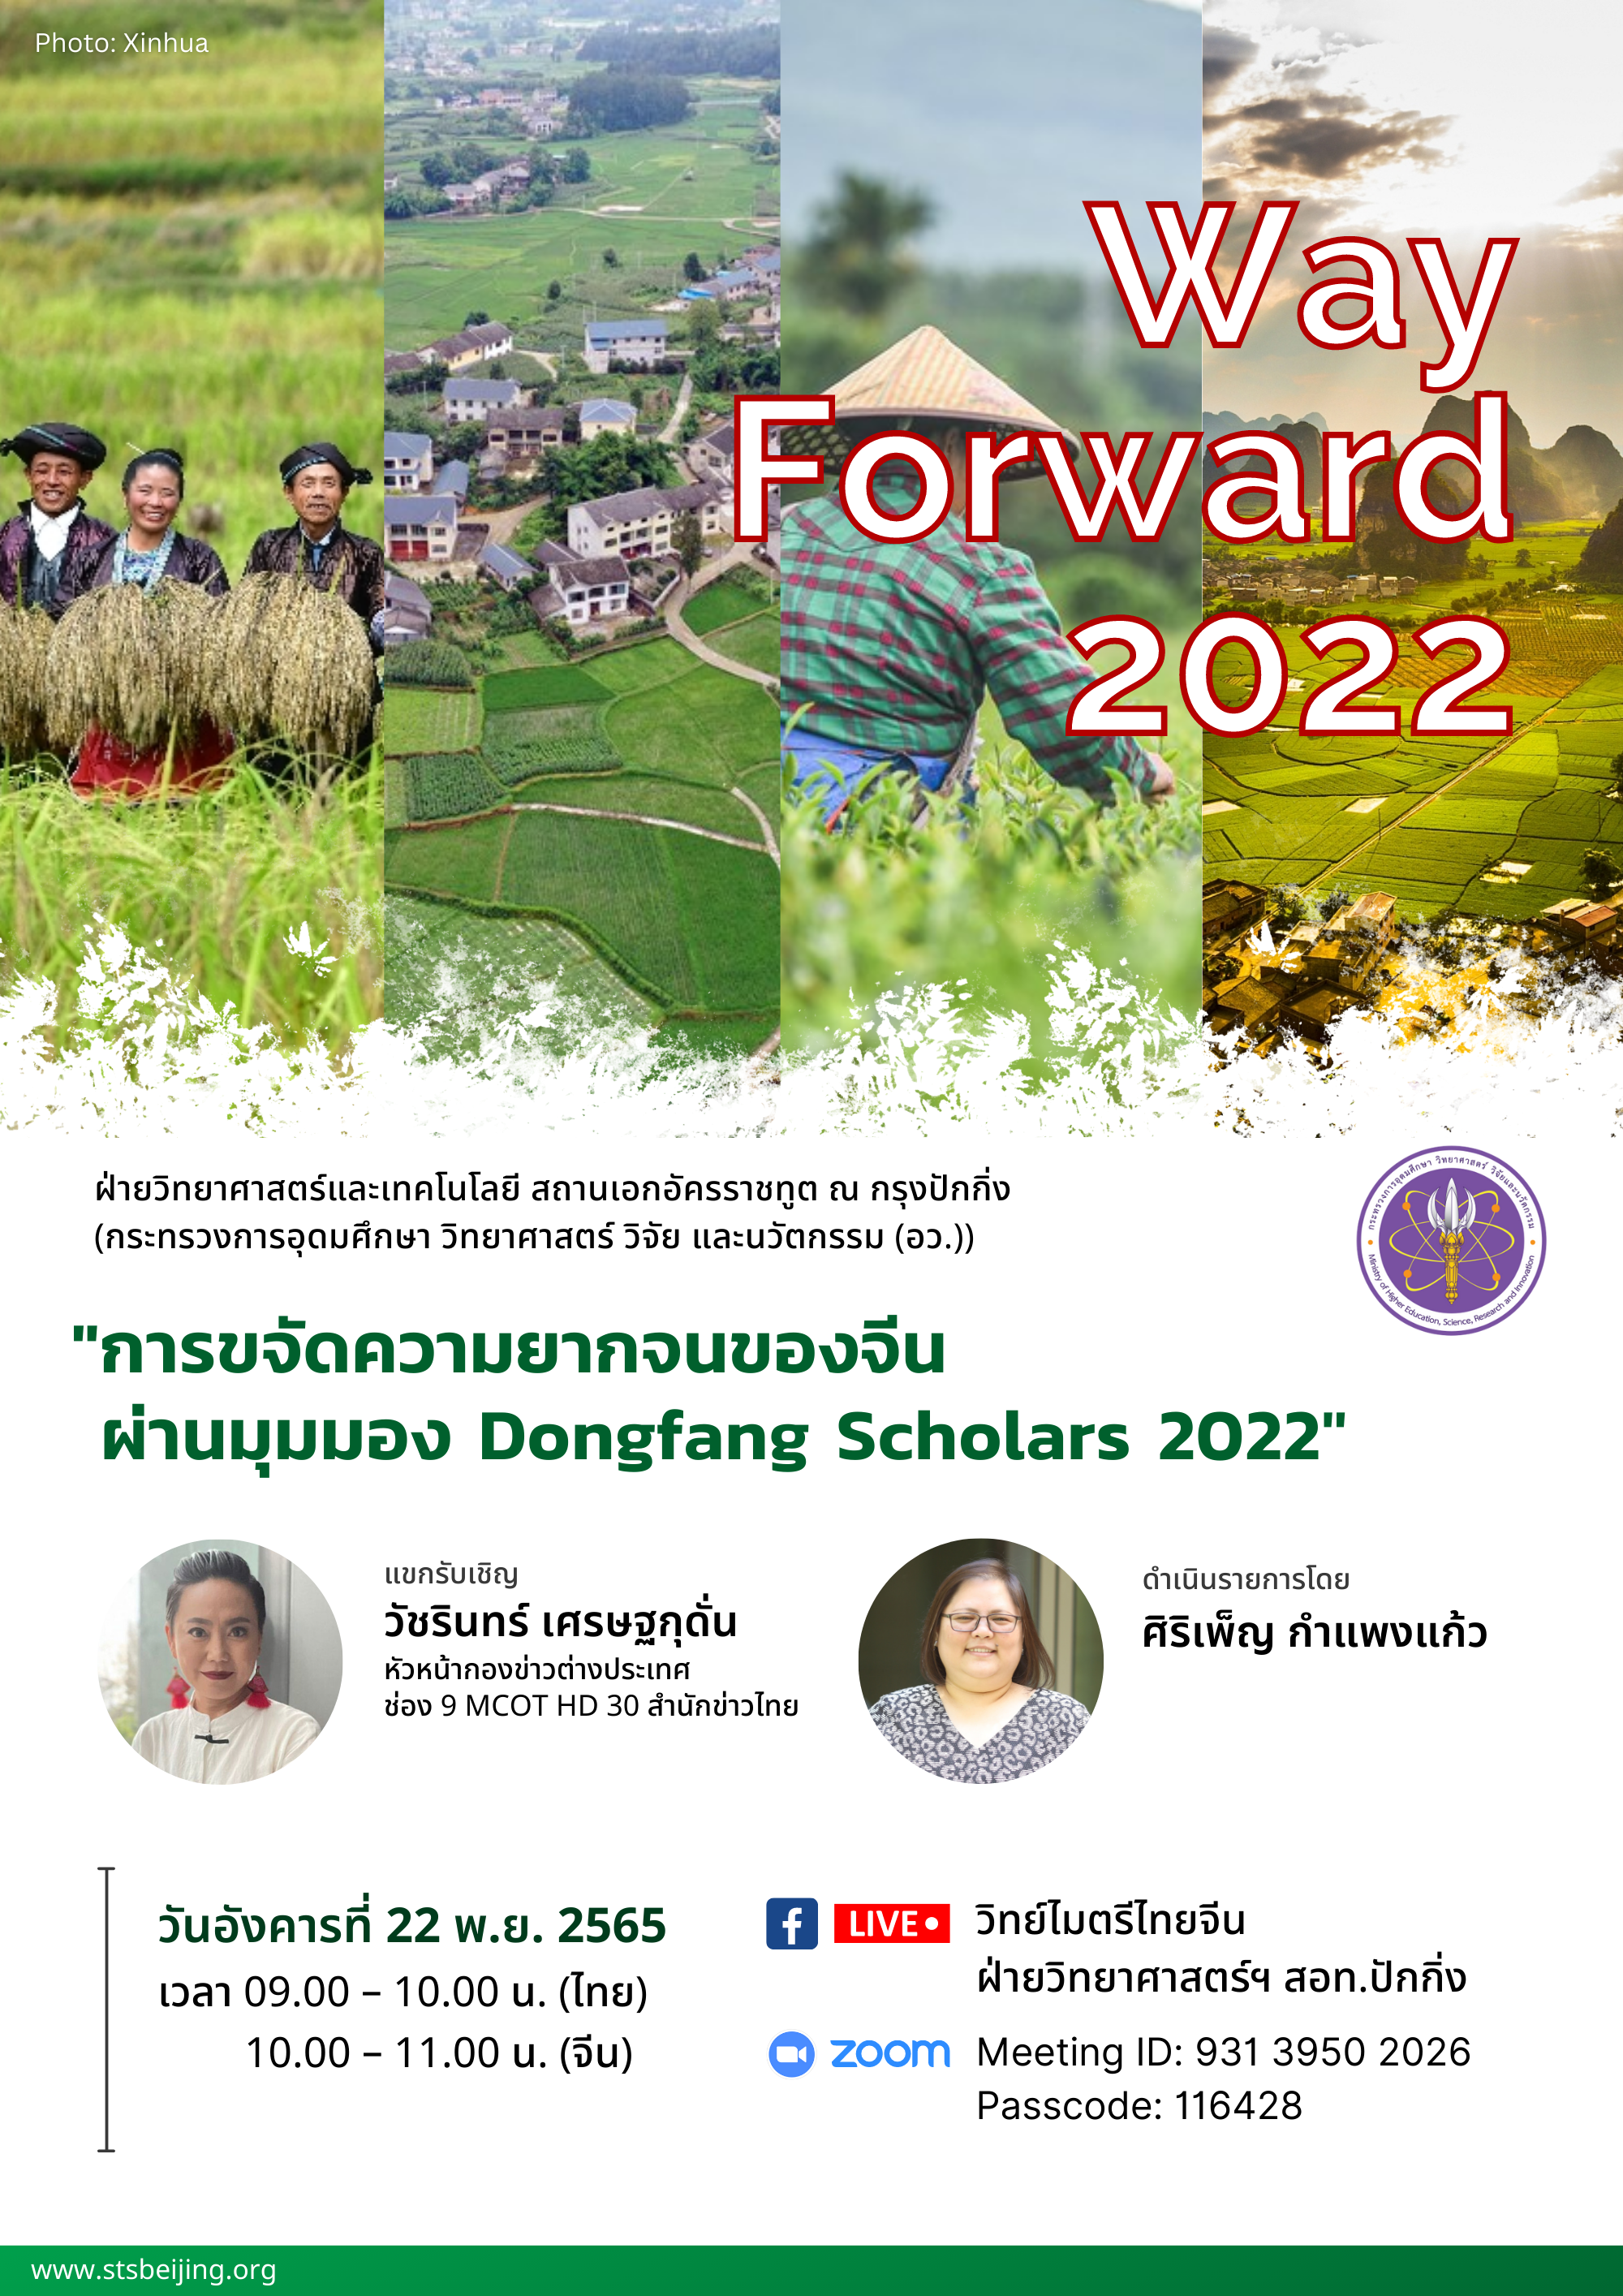 Way Forward 2022 “การขจัดความยากจนของจีน ผ่านมุมมอง Dongfang Scholars 2022”